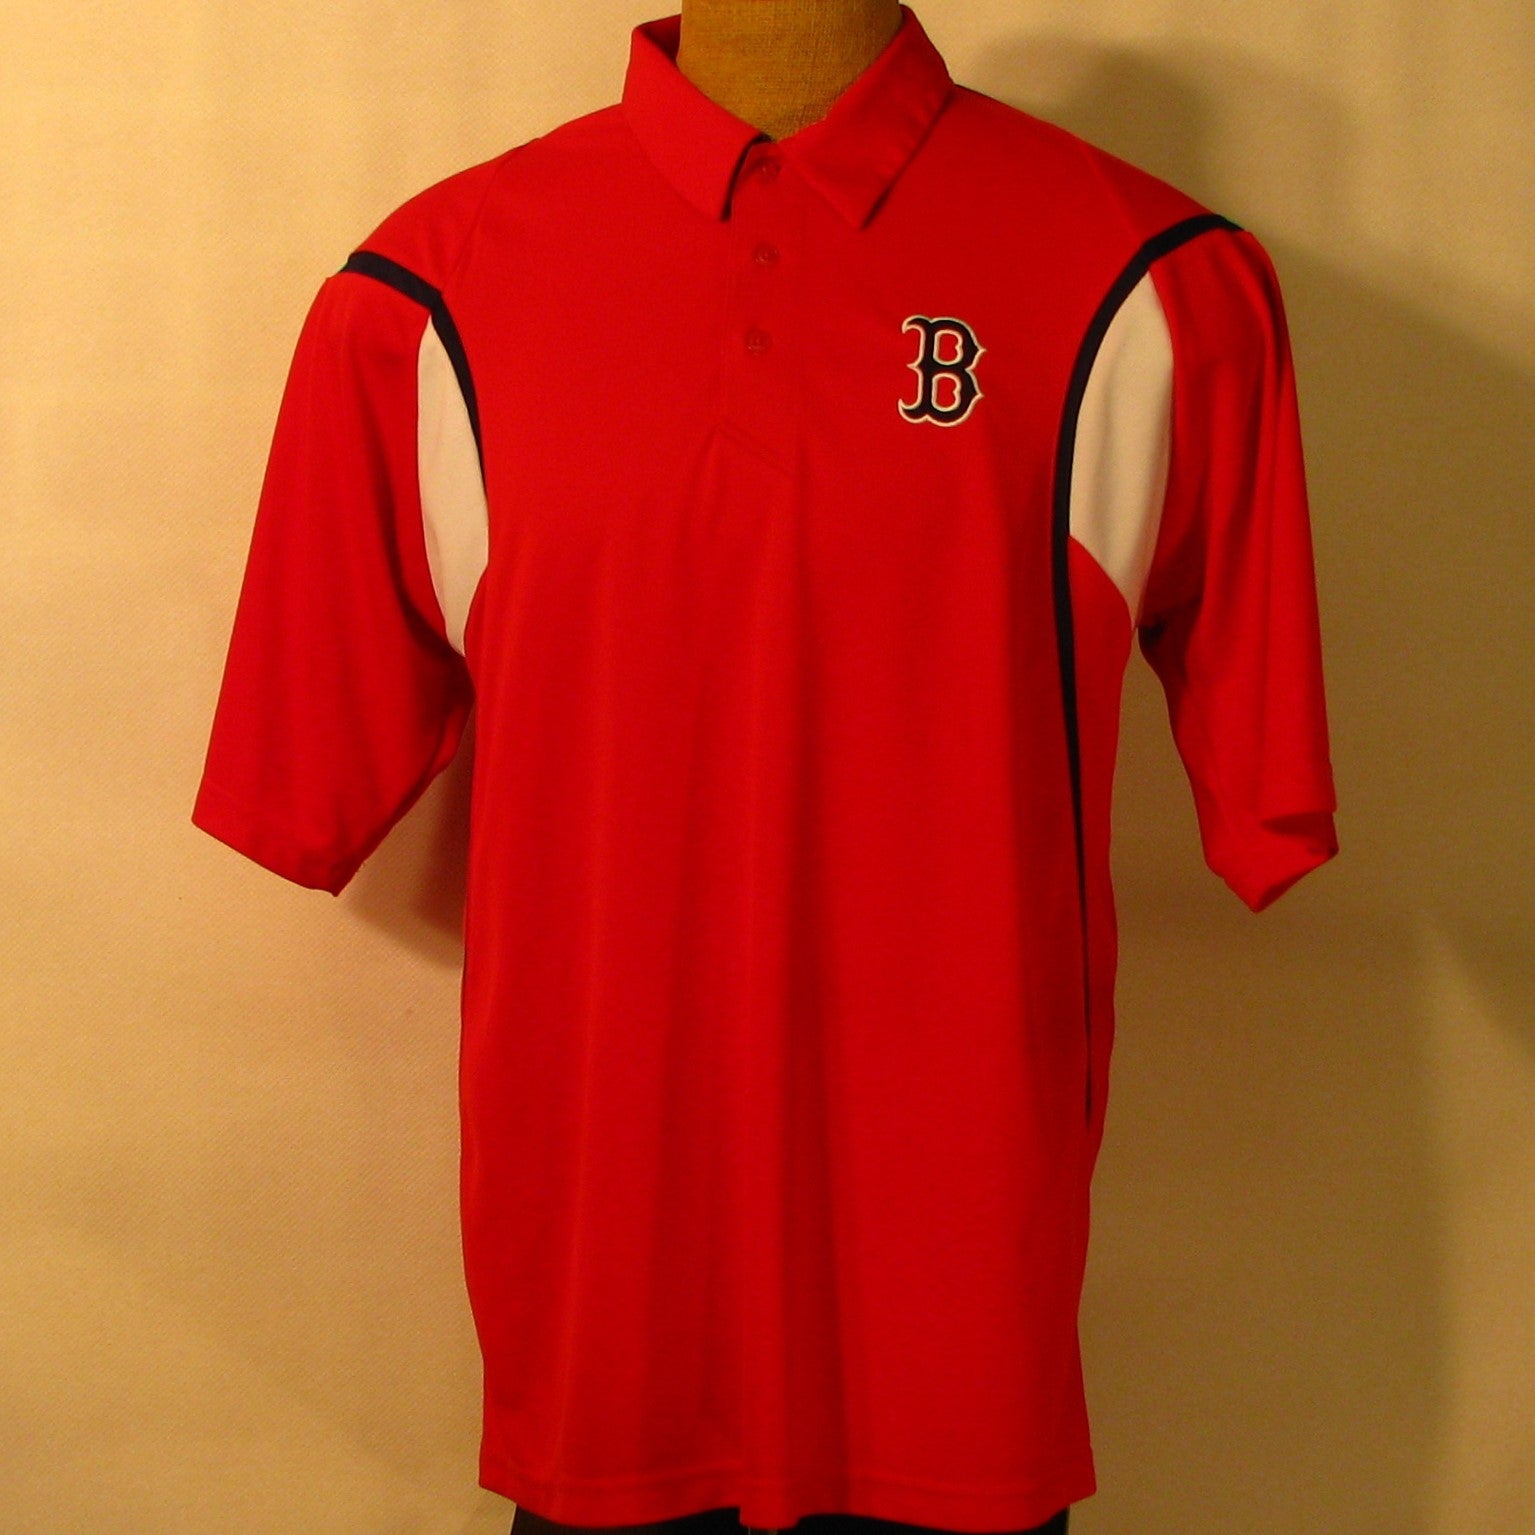 boston red sox golf shirt